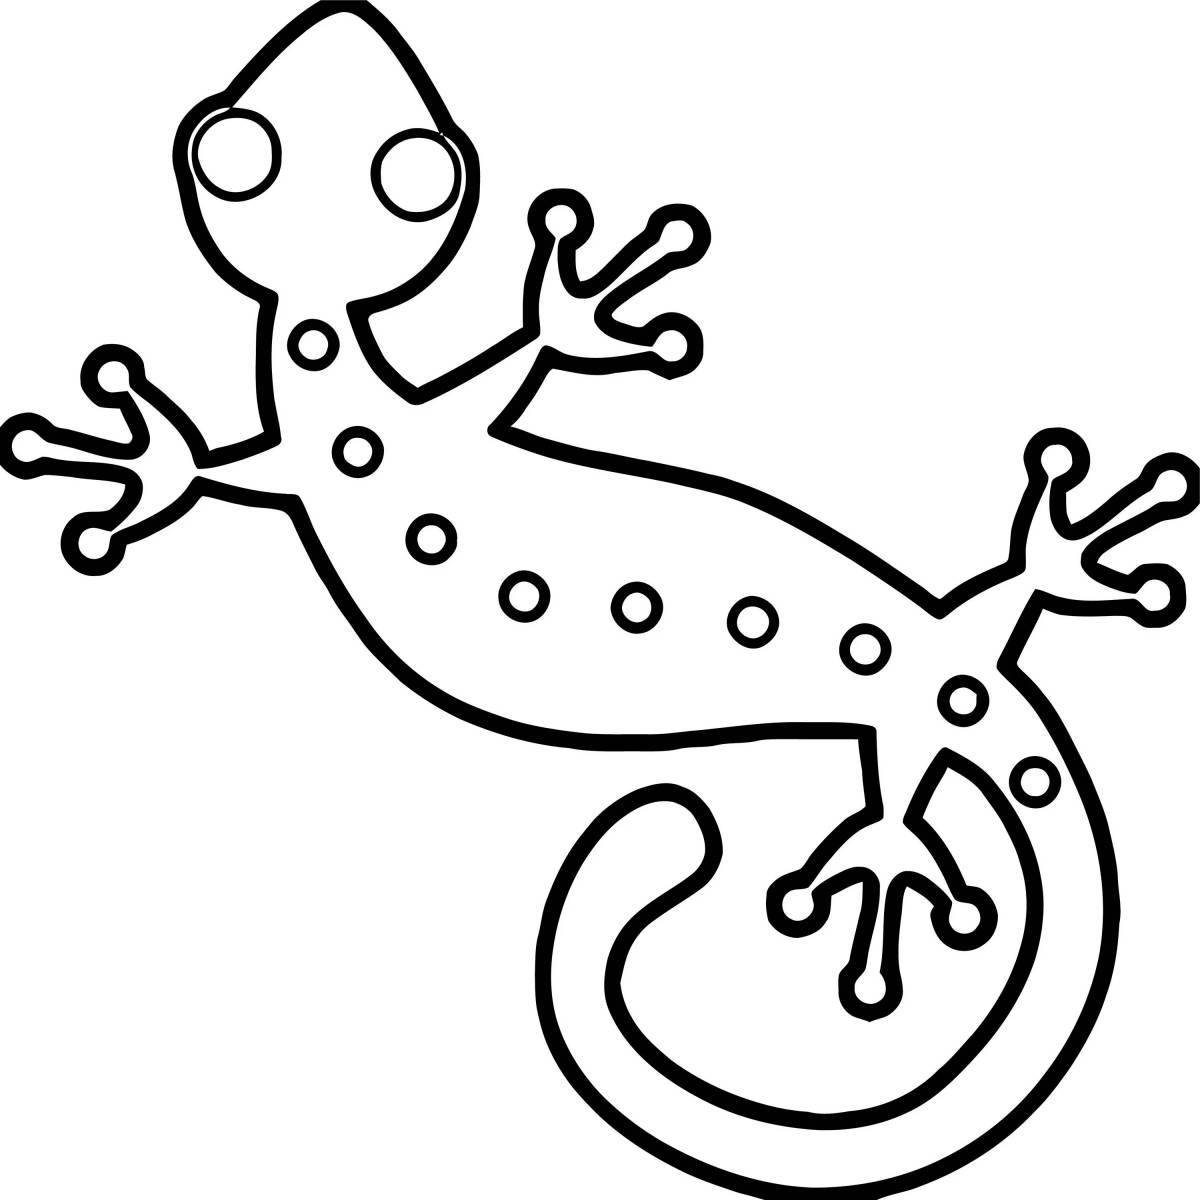 Lizard for kids #5